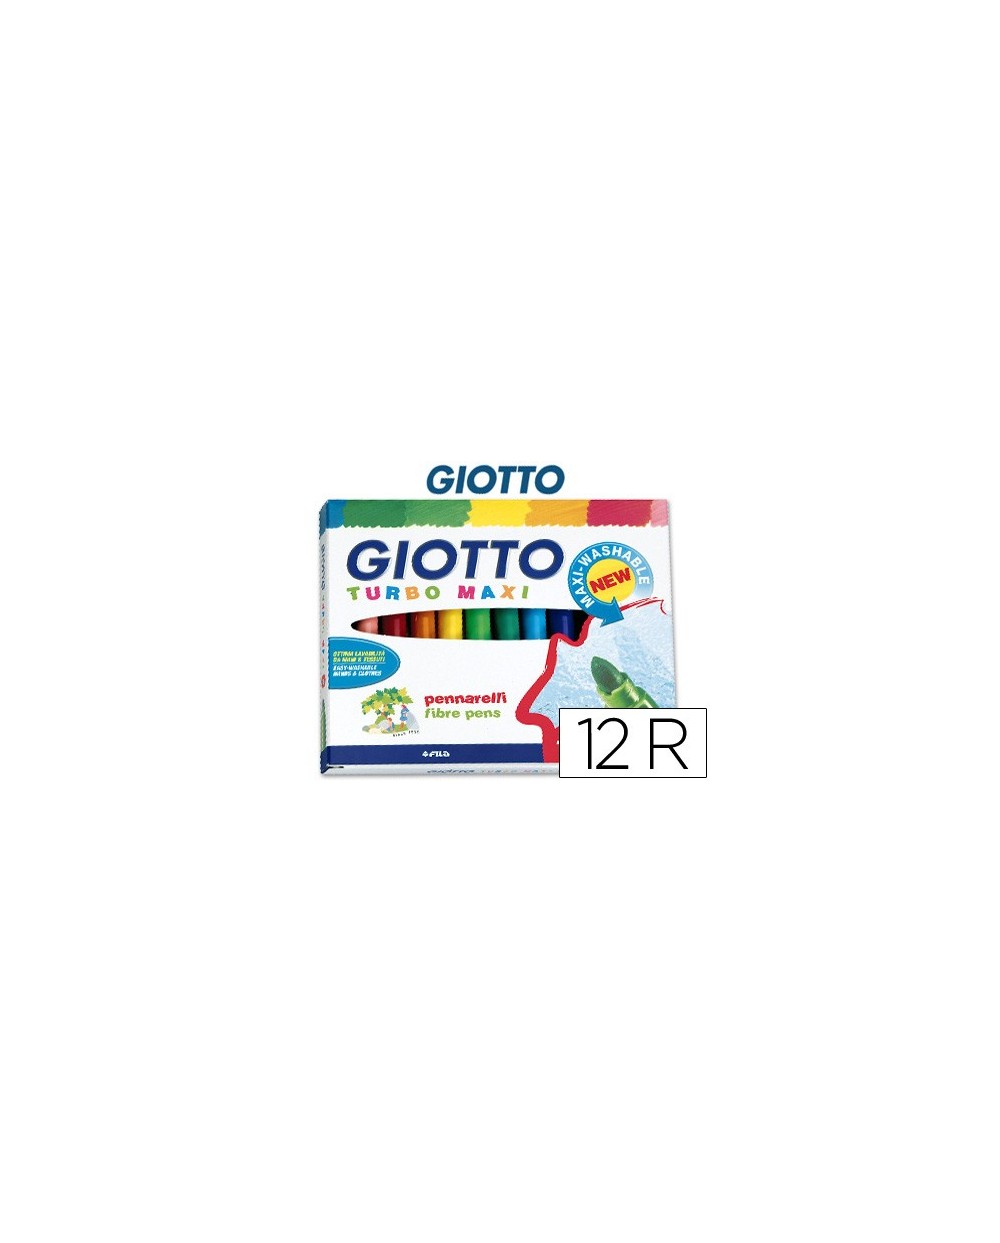 Rotulador giotto turbo maxi caja de 12 colores lavables con punta bloqueada